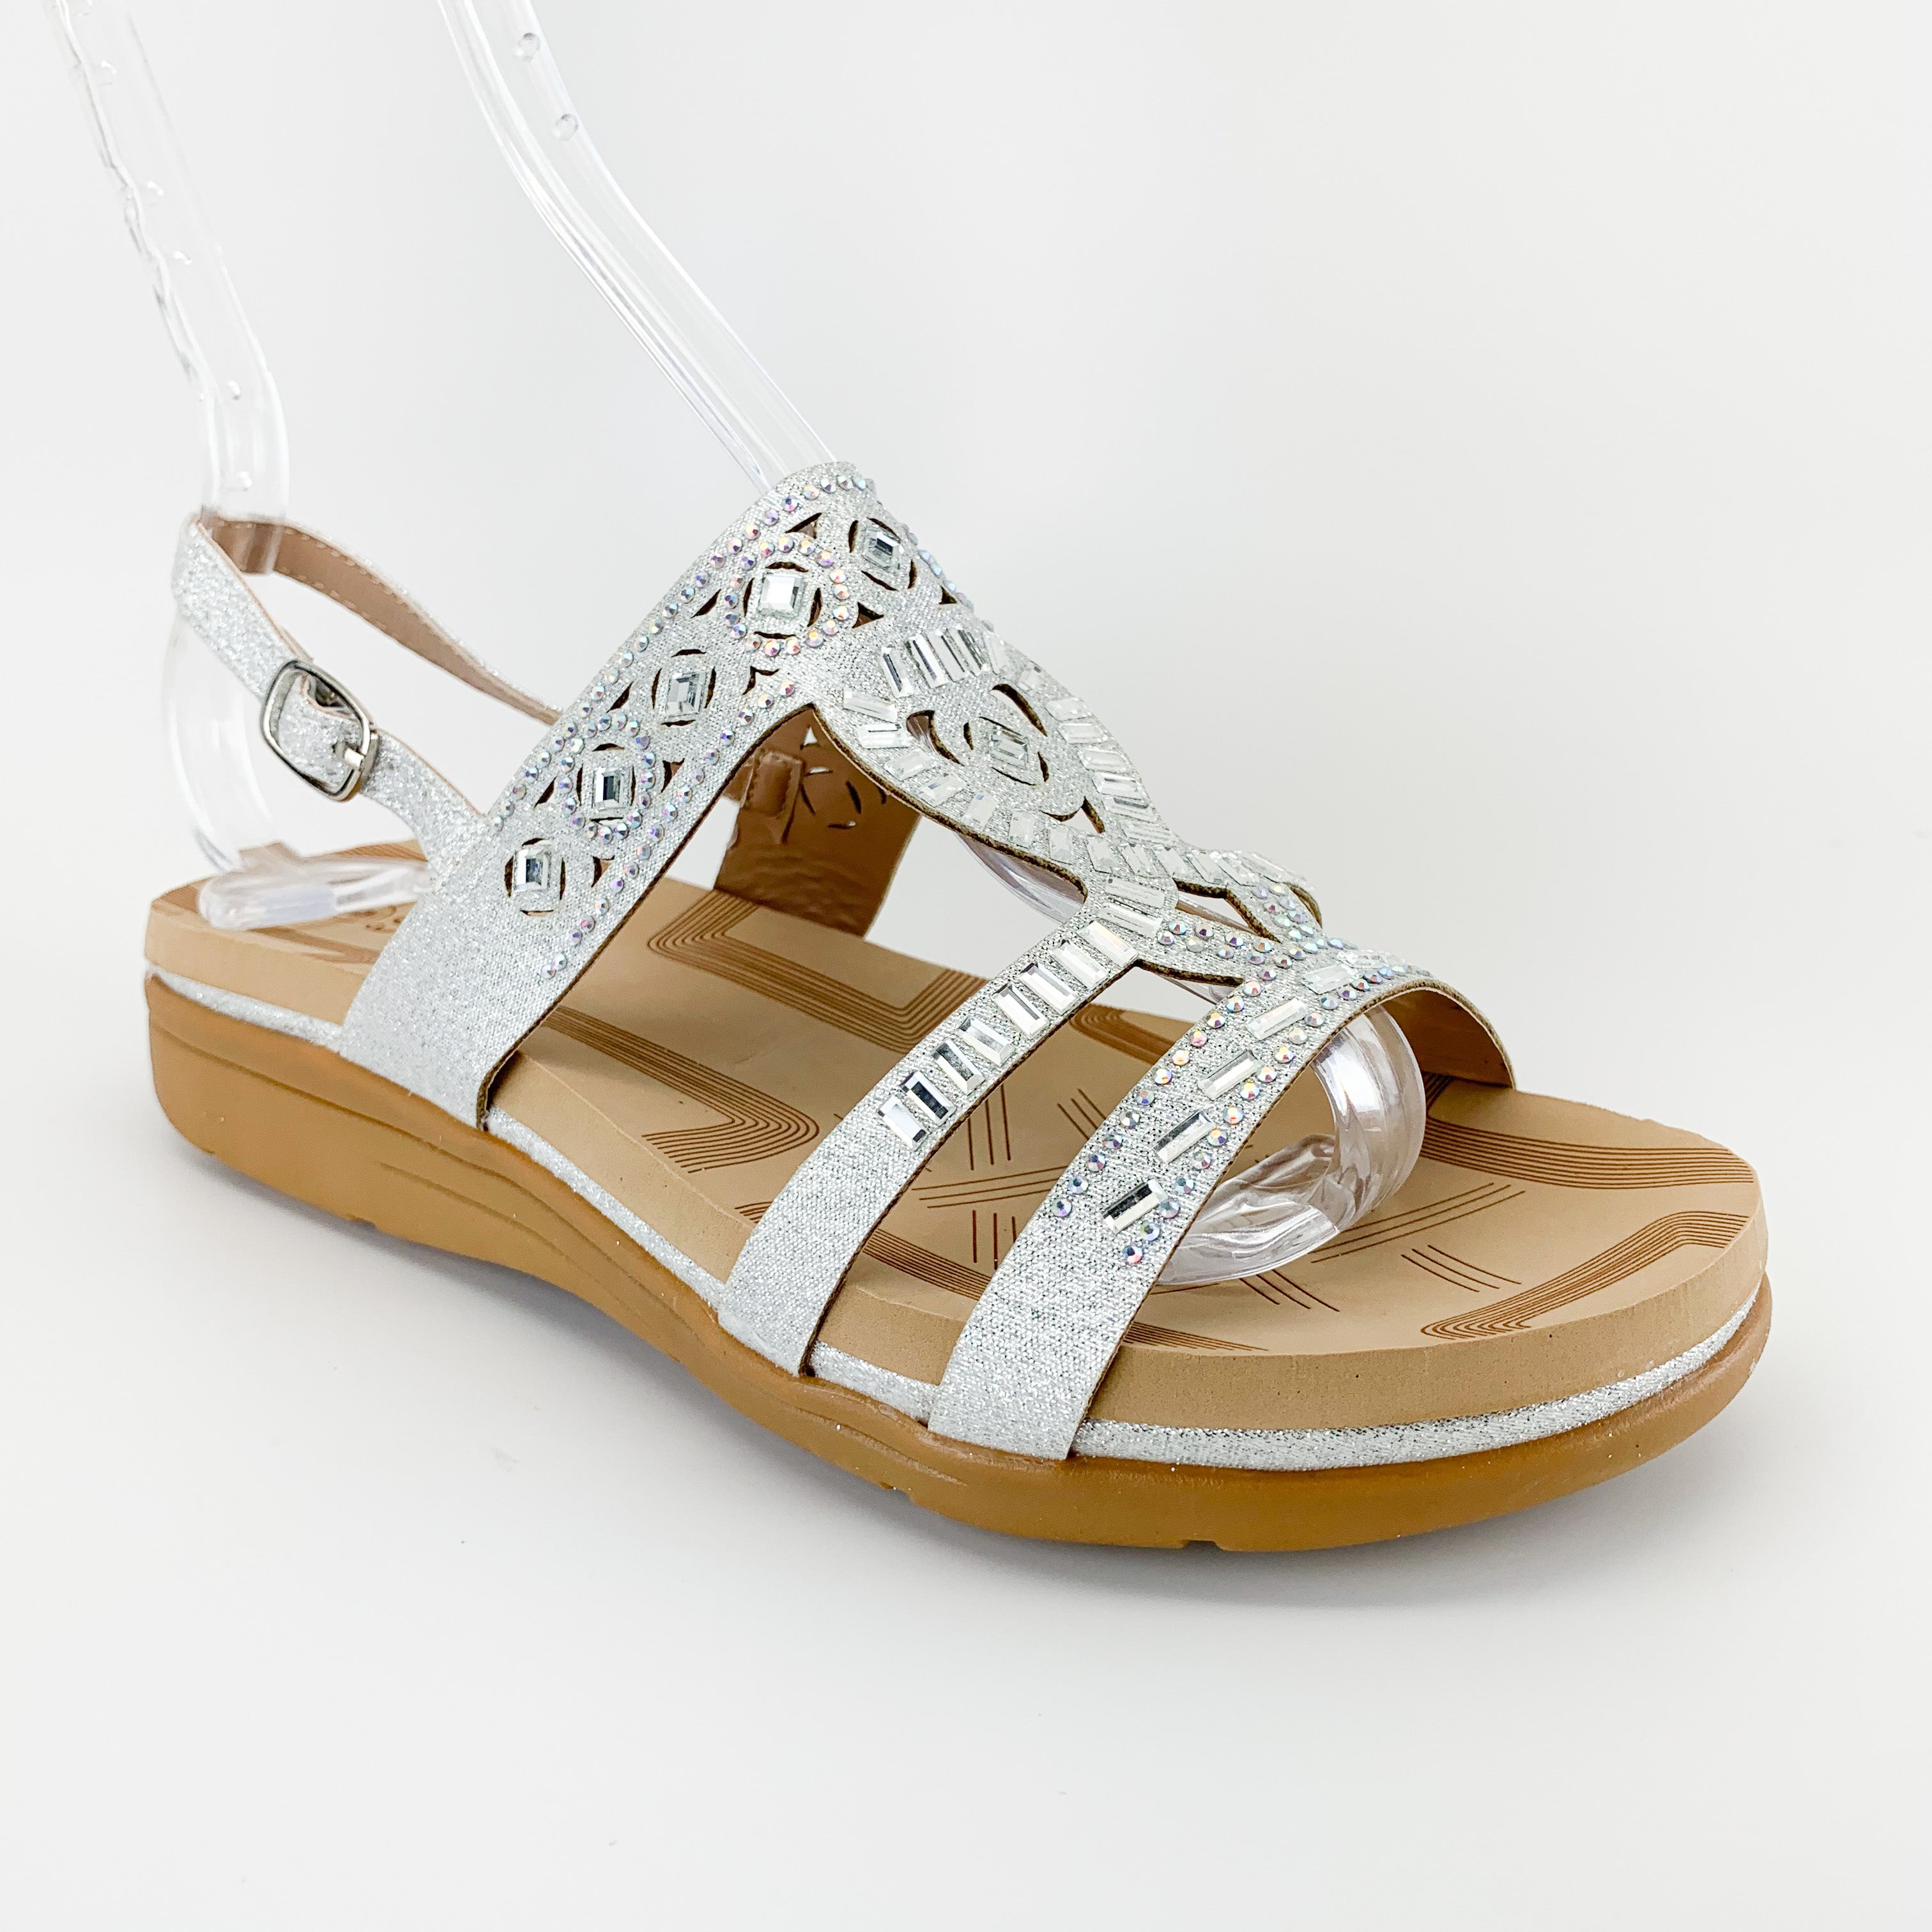 Women's sandals Size 11 Seven7 Pearl Comfort Slide, Snake Faux-leather  upper. | eBay